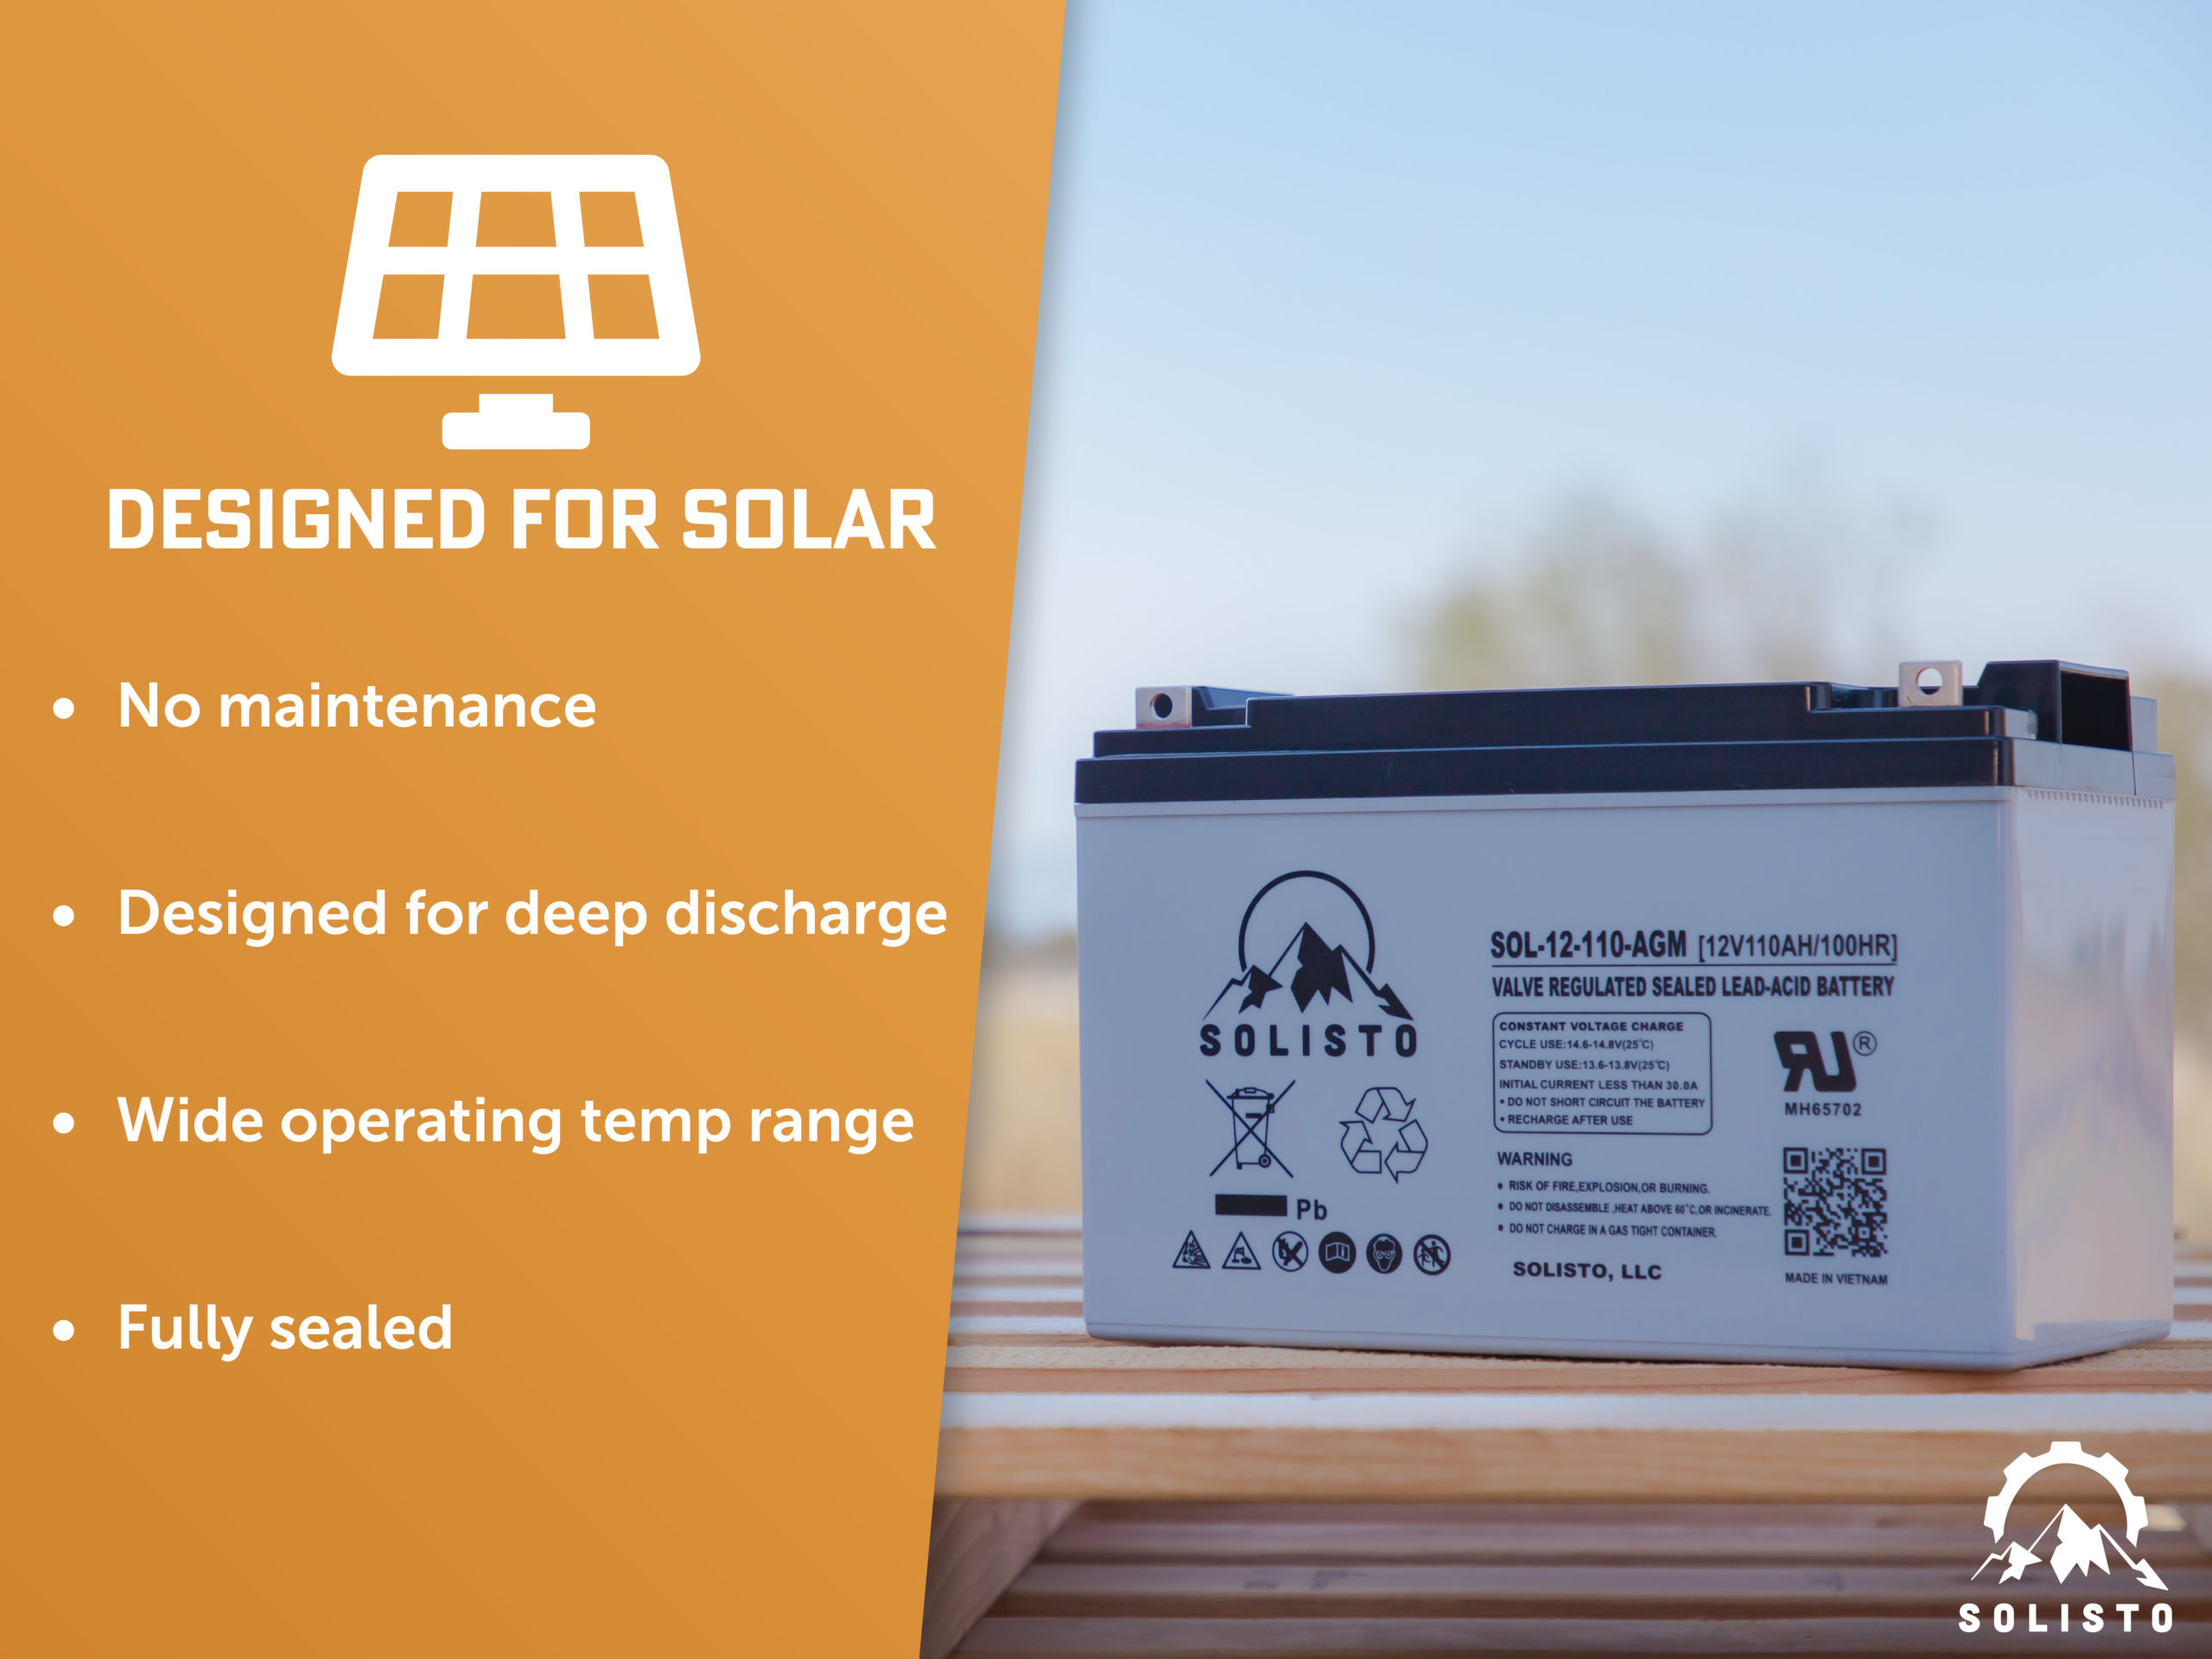 Solis Solar AGM 60Ah Wohnmobil Batterie, 124,90 €